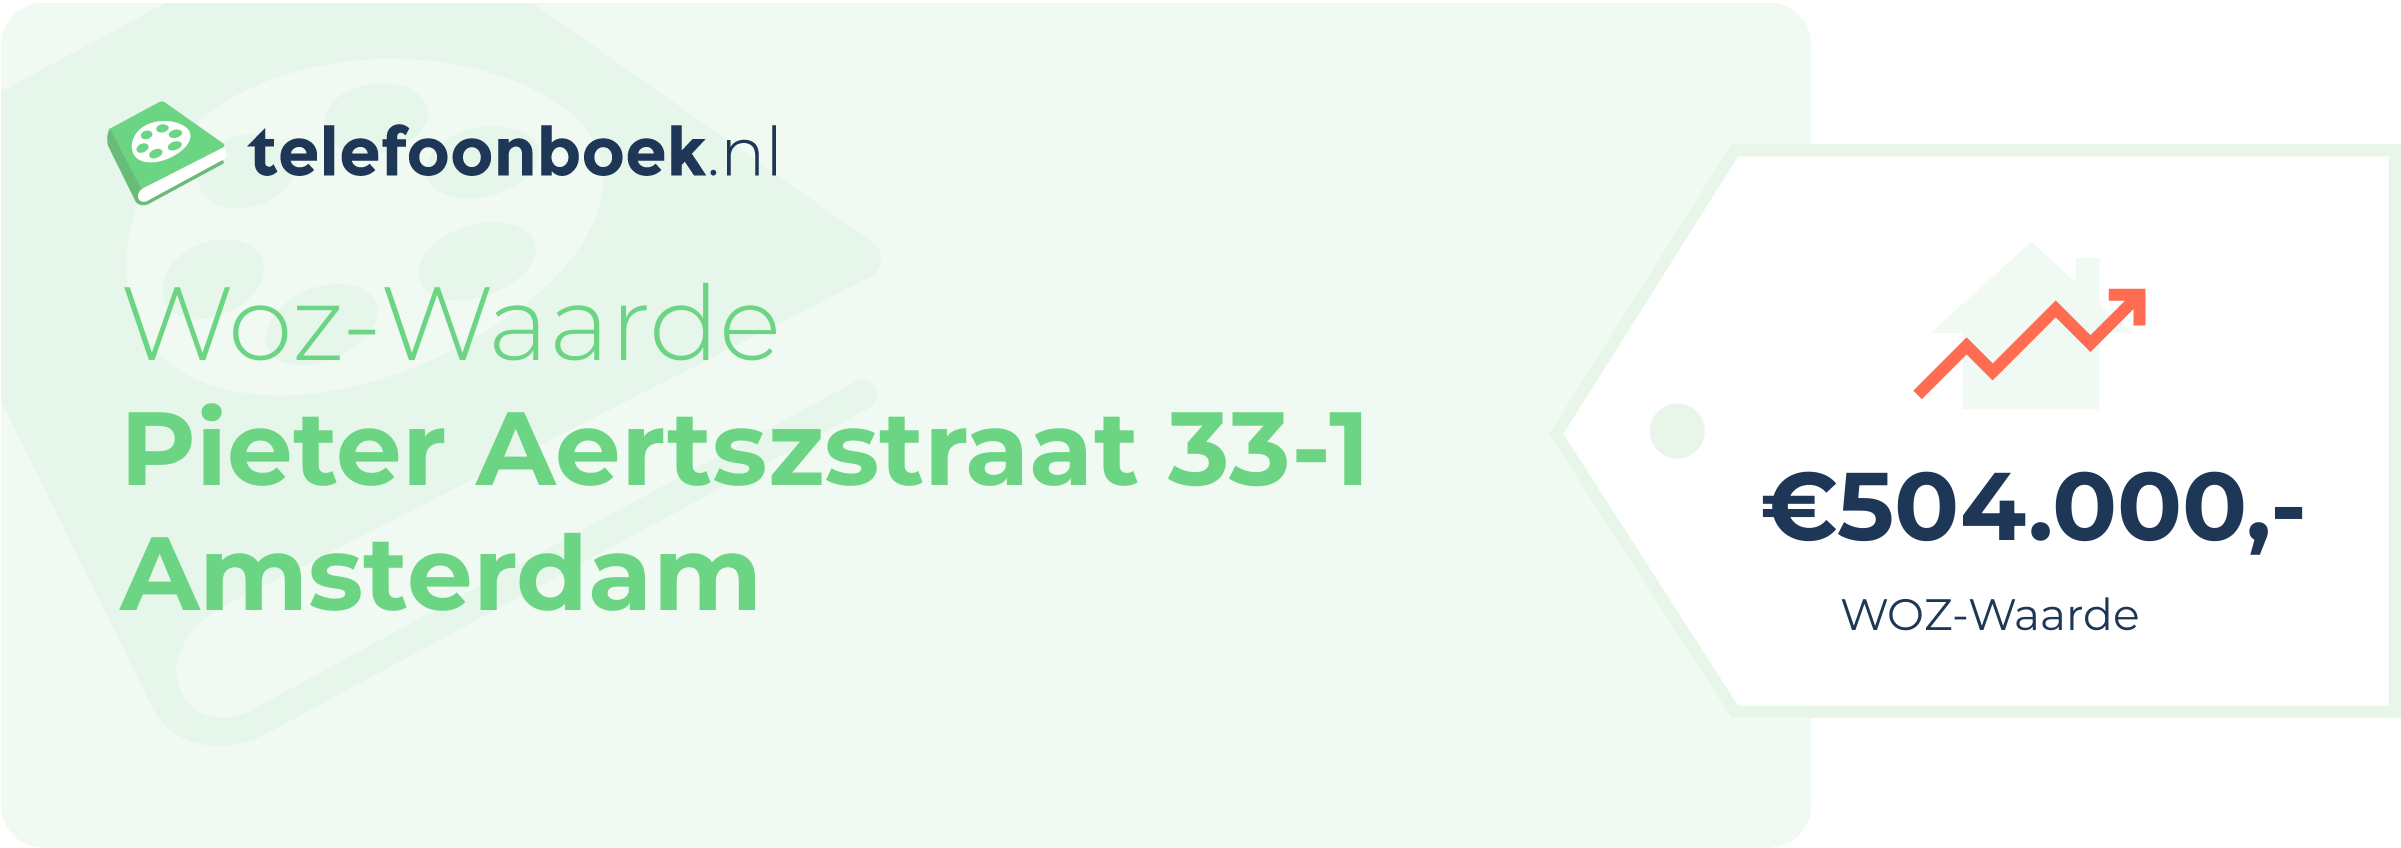 WOZ-waarde Pieter Aertszstraat 33-1 Amsterdam